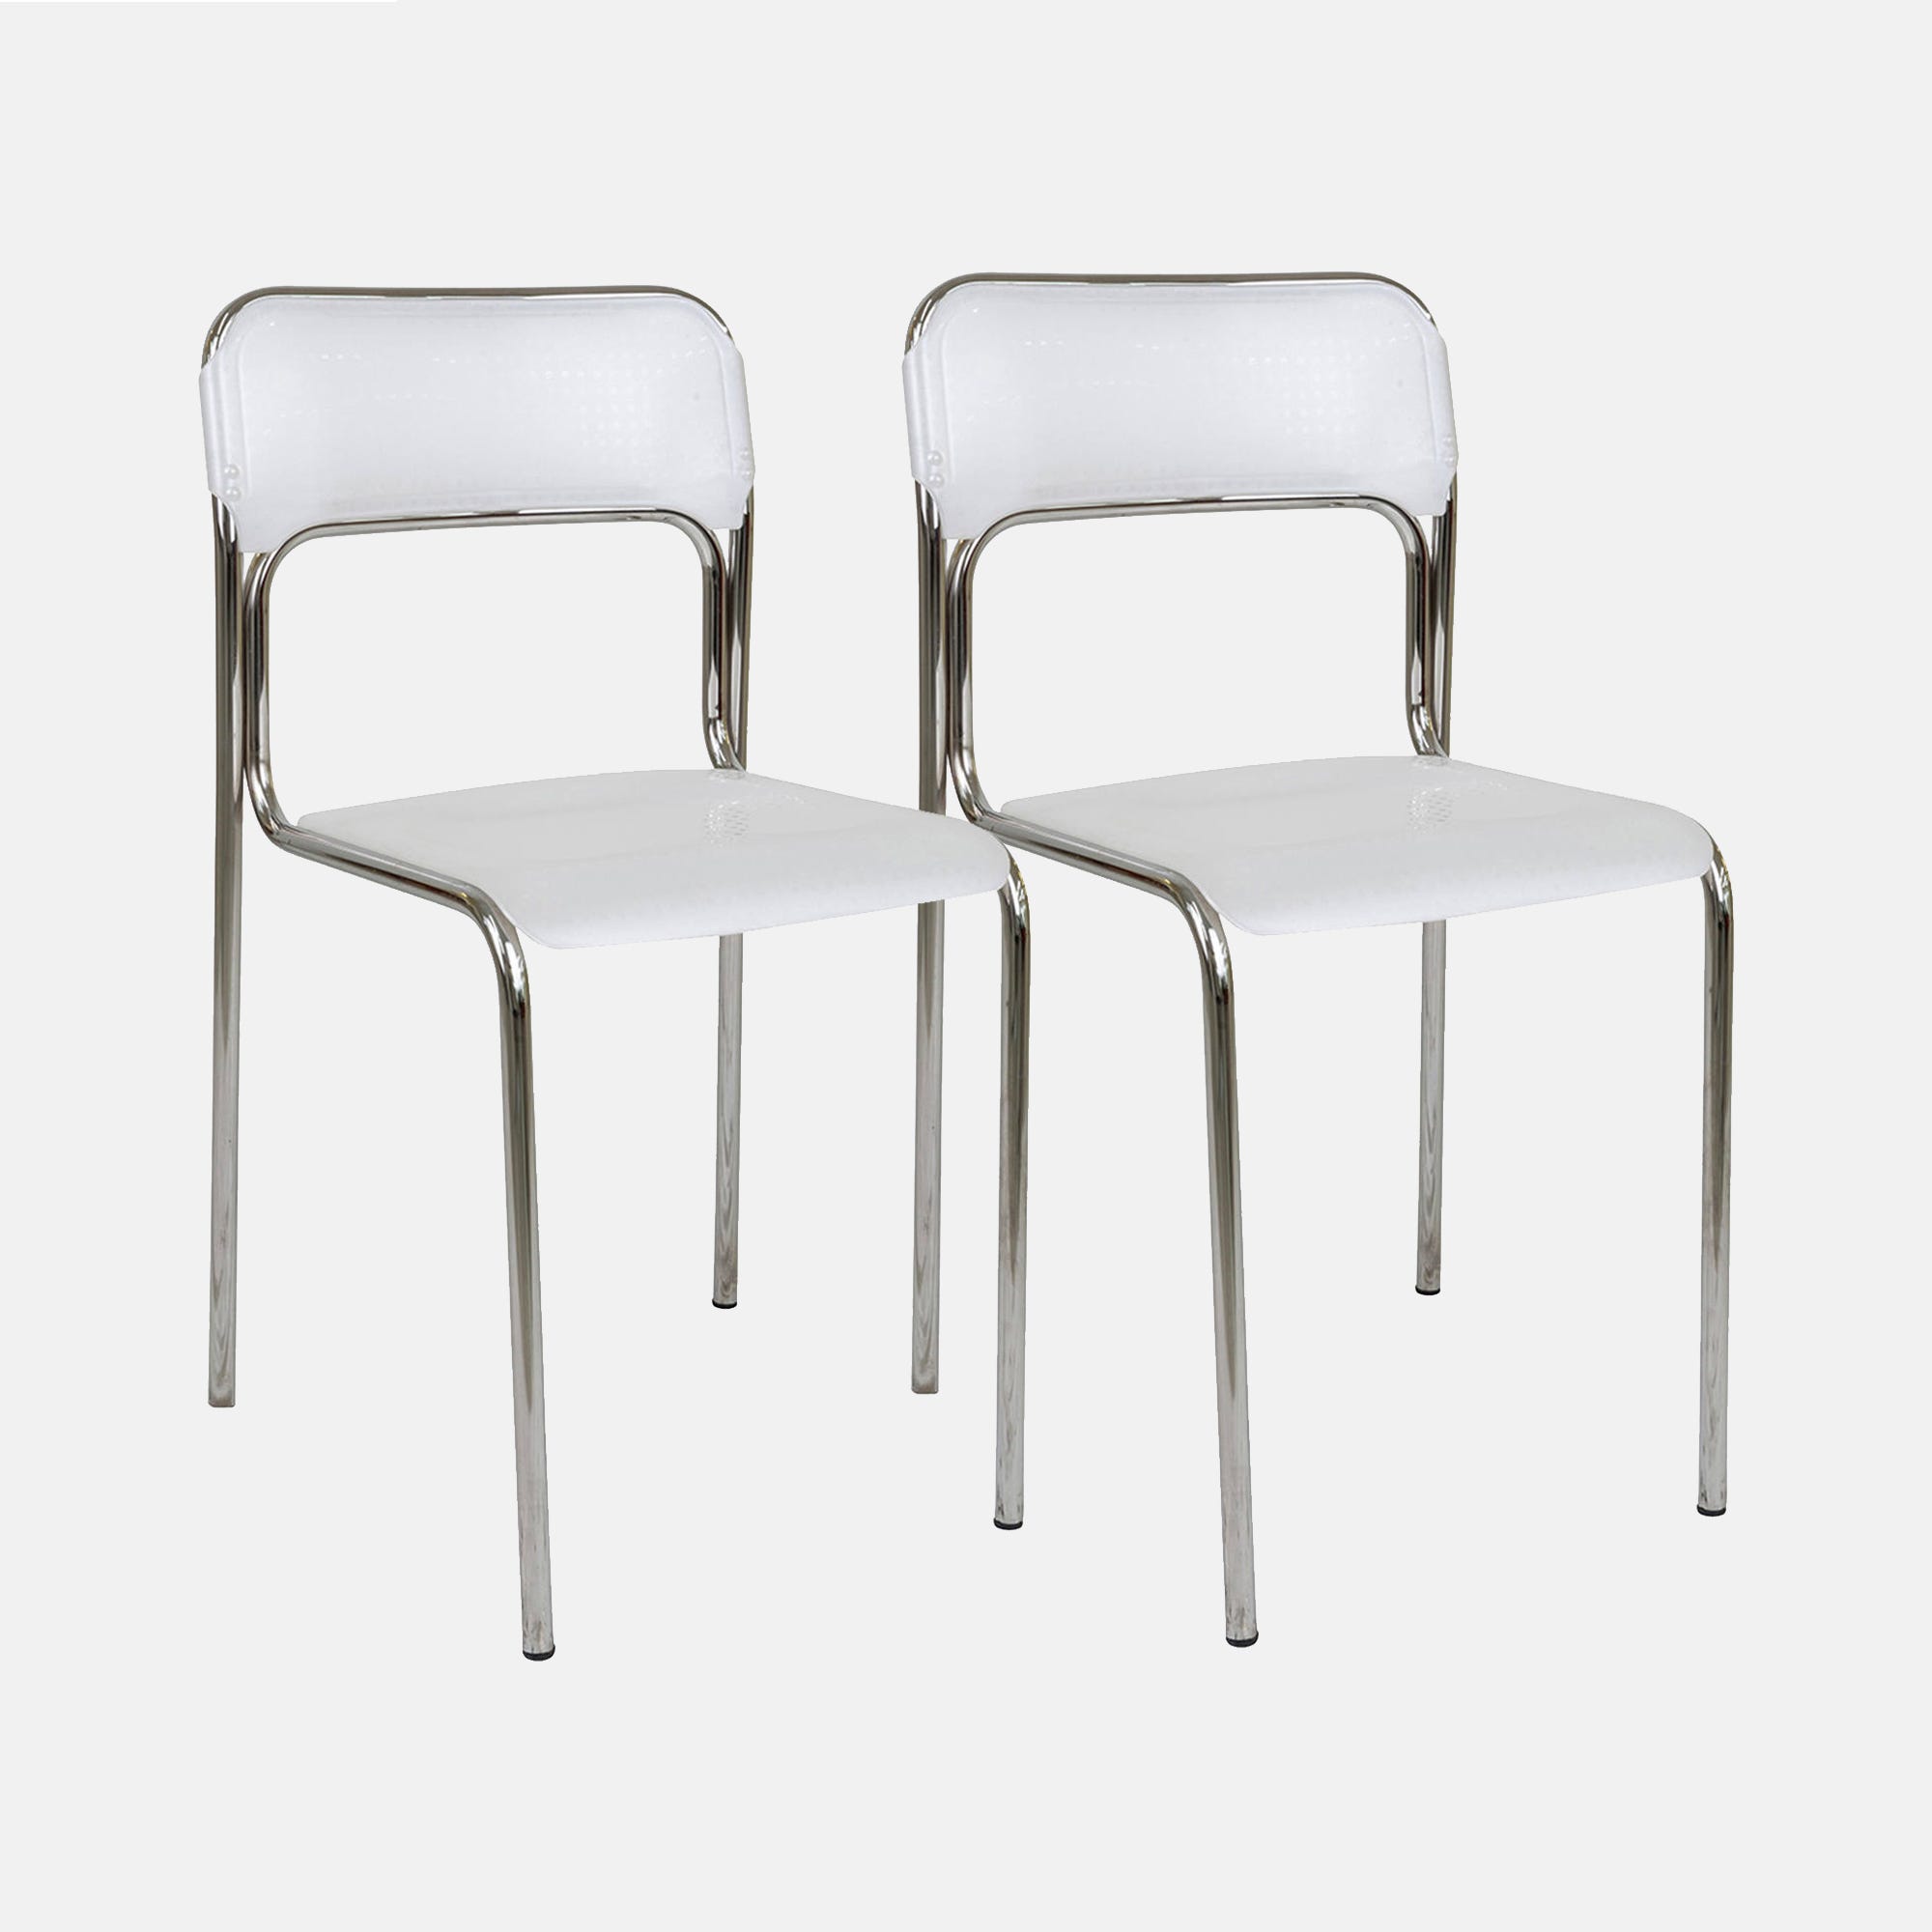 Set di 2 Sedie moderne in metallo e polipropilene, per sala da pranzo,  cucina o salotto, cm 43x45h81, Seduta h cm 48, colore Bianco